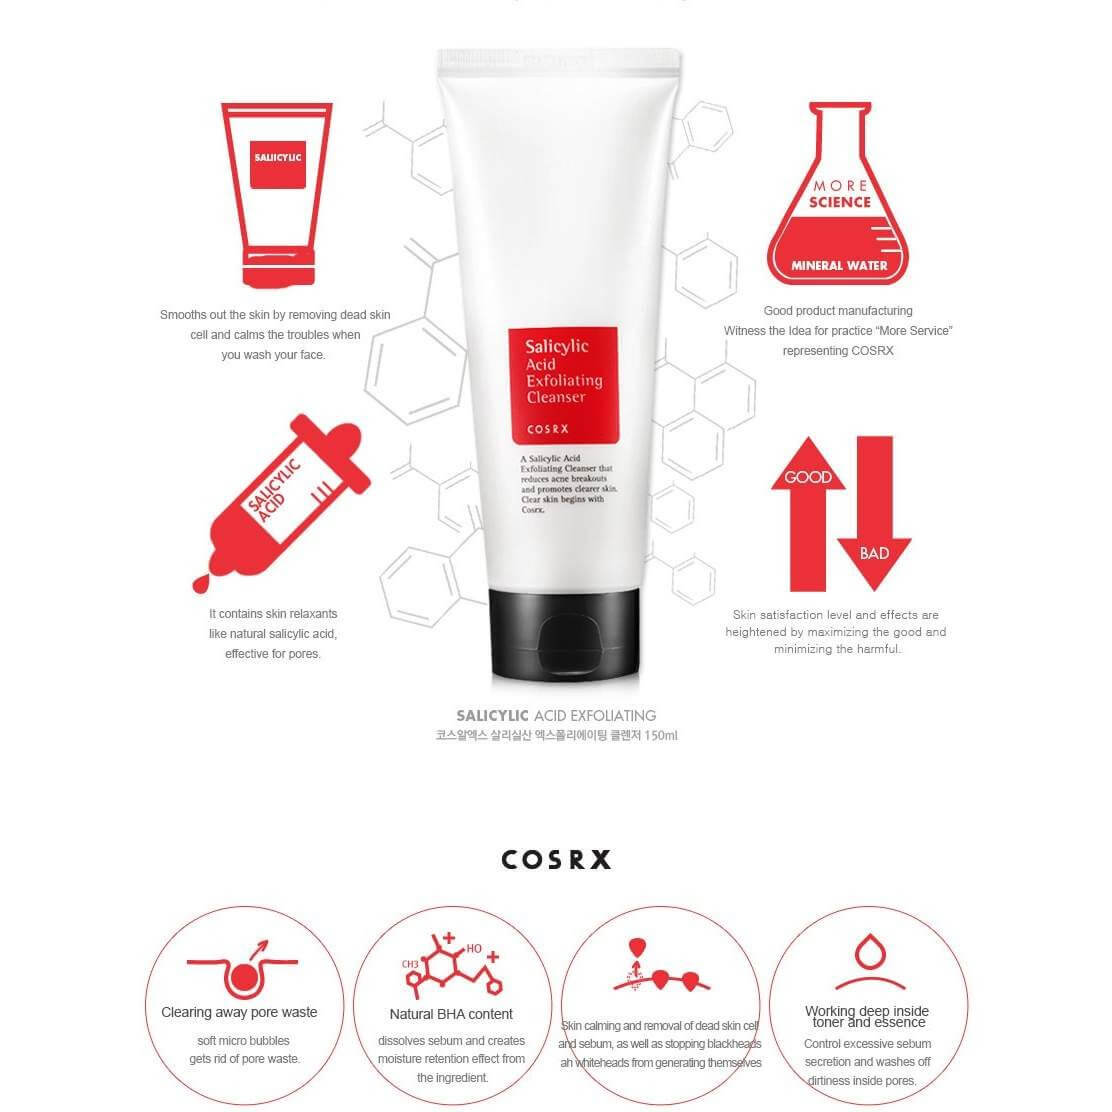 Cosrx Salicylic Acid Exfoliating Cleanser 150ml,Cosrx,คอร์สอาร์เอ็ก,Salicylic Acid Exfoliating,Cosrx ราคา,Cosrxหาซื้อได้ที่,ผลิตภัณฑ์ทำความสะอาดผิวหน้า Cosrx